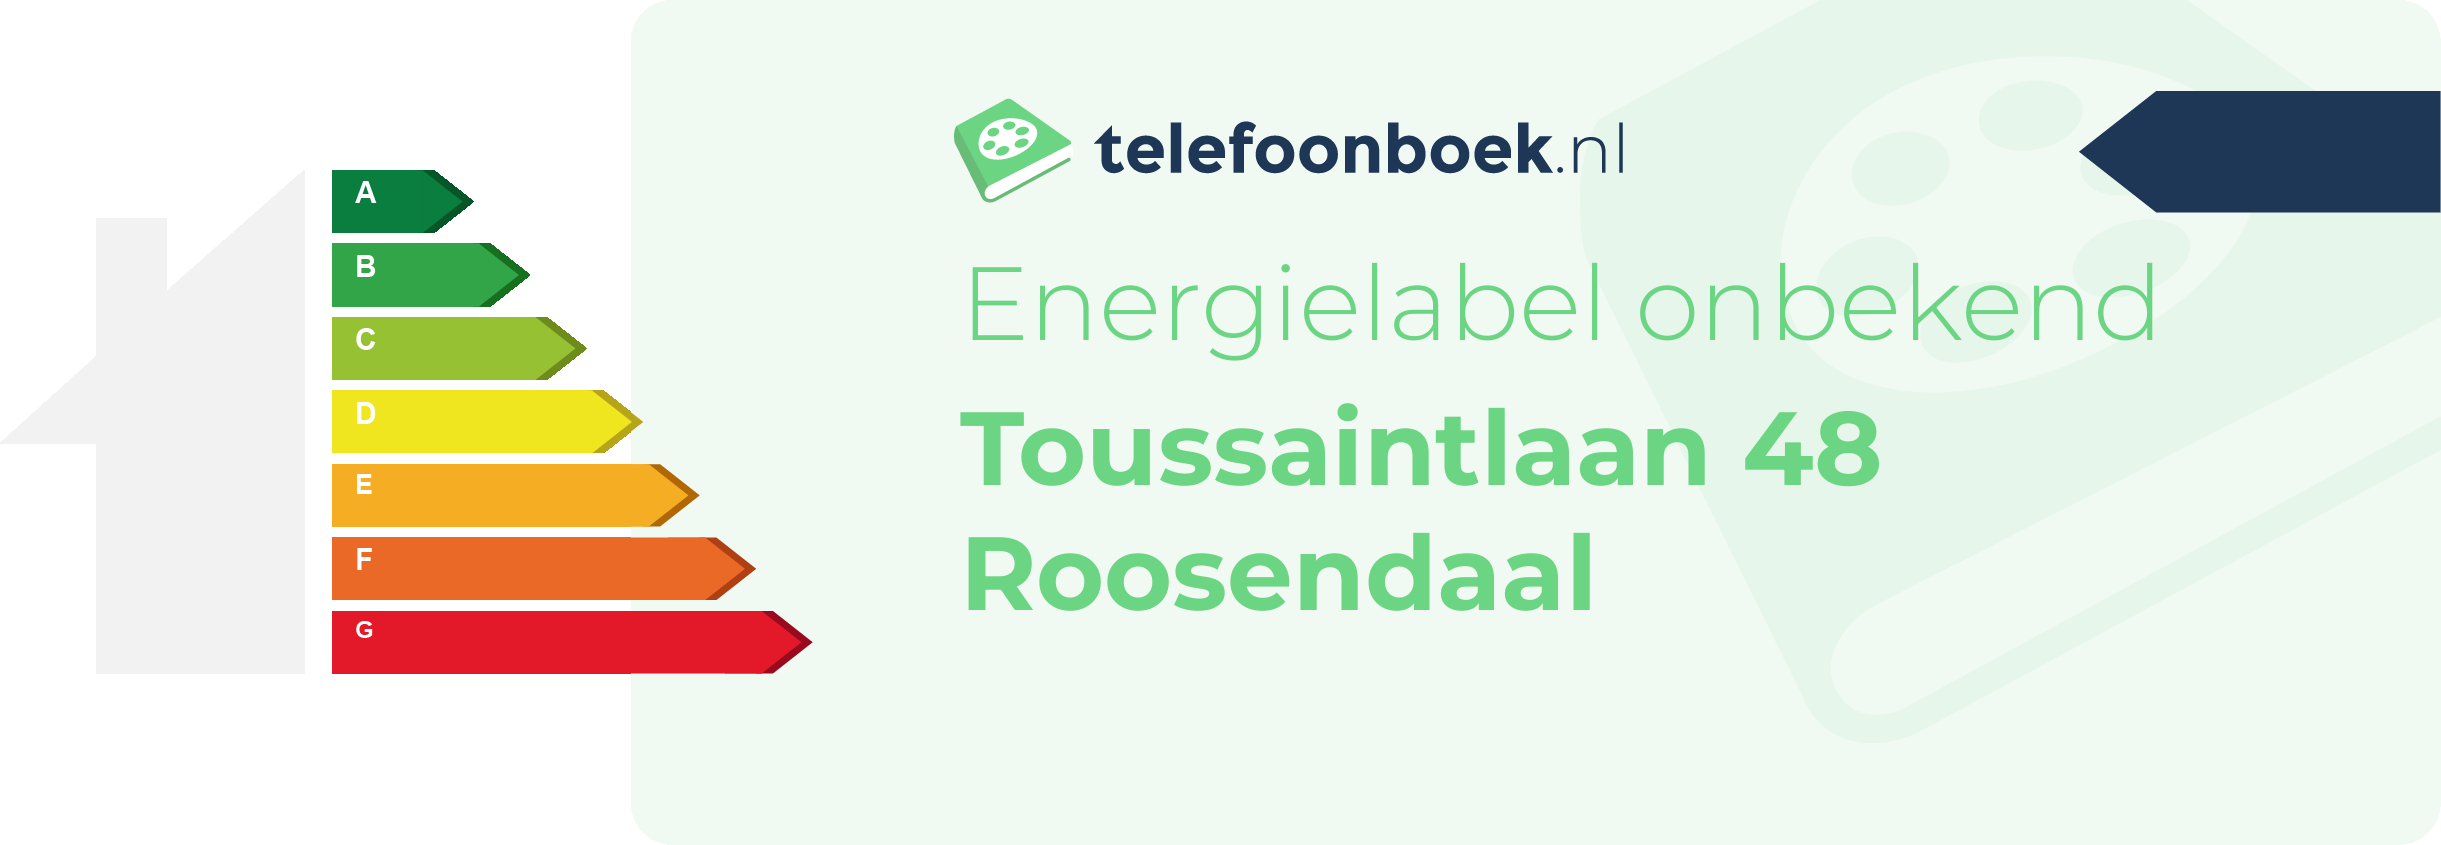 Energielabel Toussaintlaan 48 Roosendaal